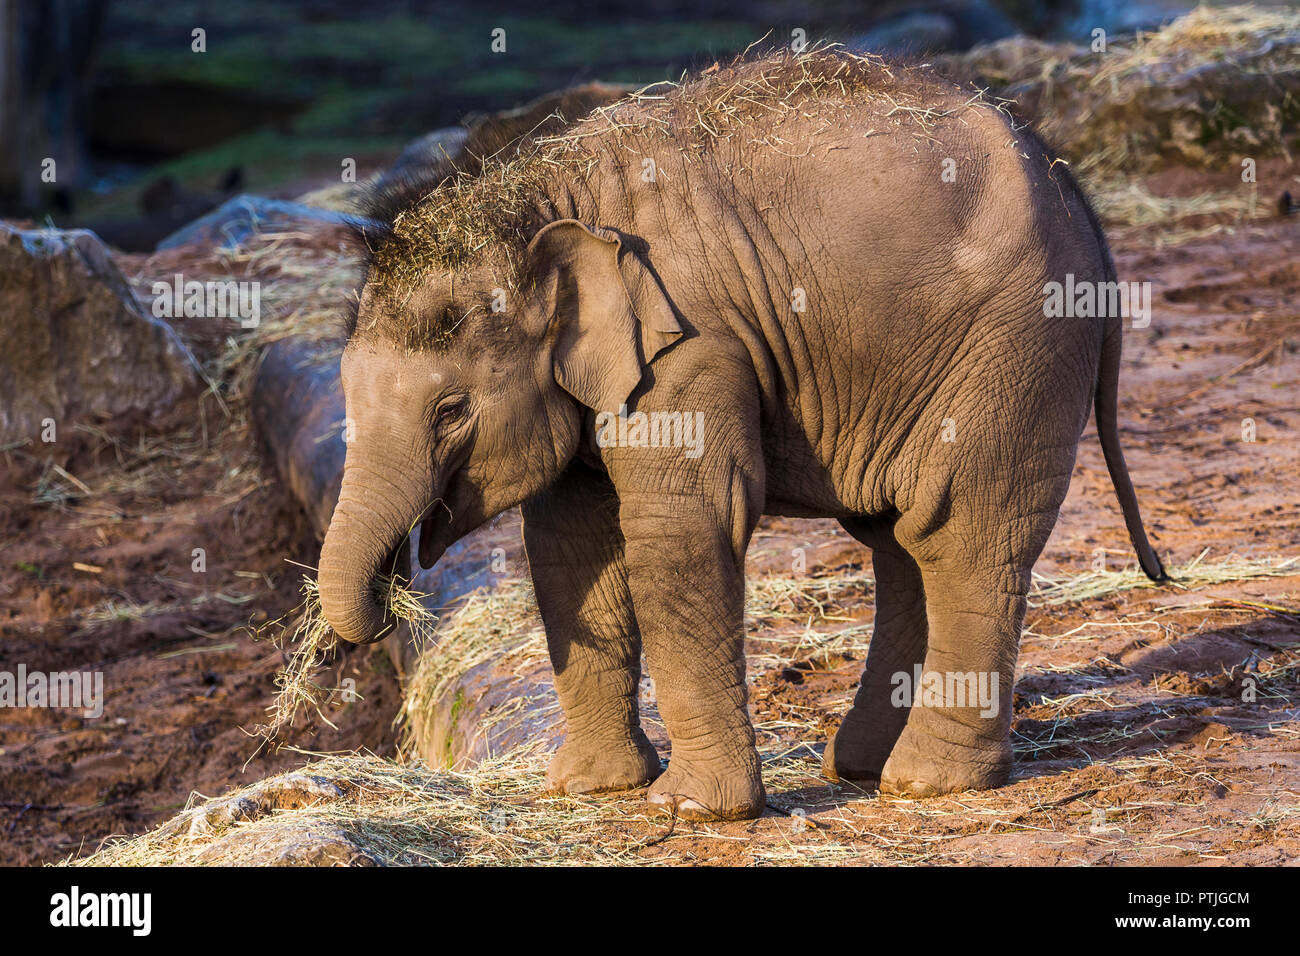 An Asian elephant calf feeds around a rocky area. Stock Photo